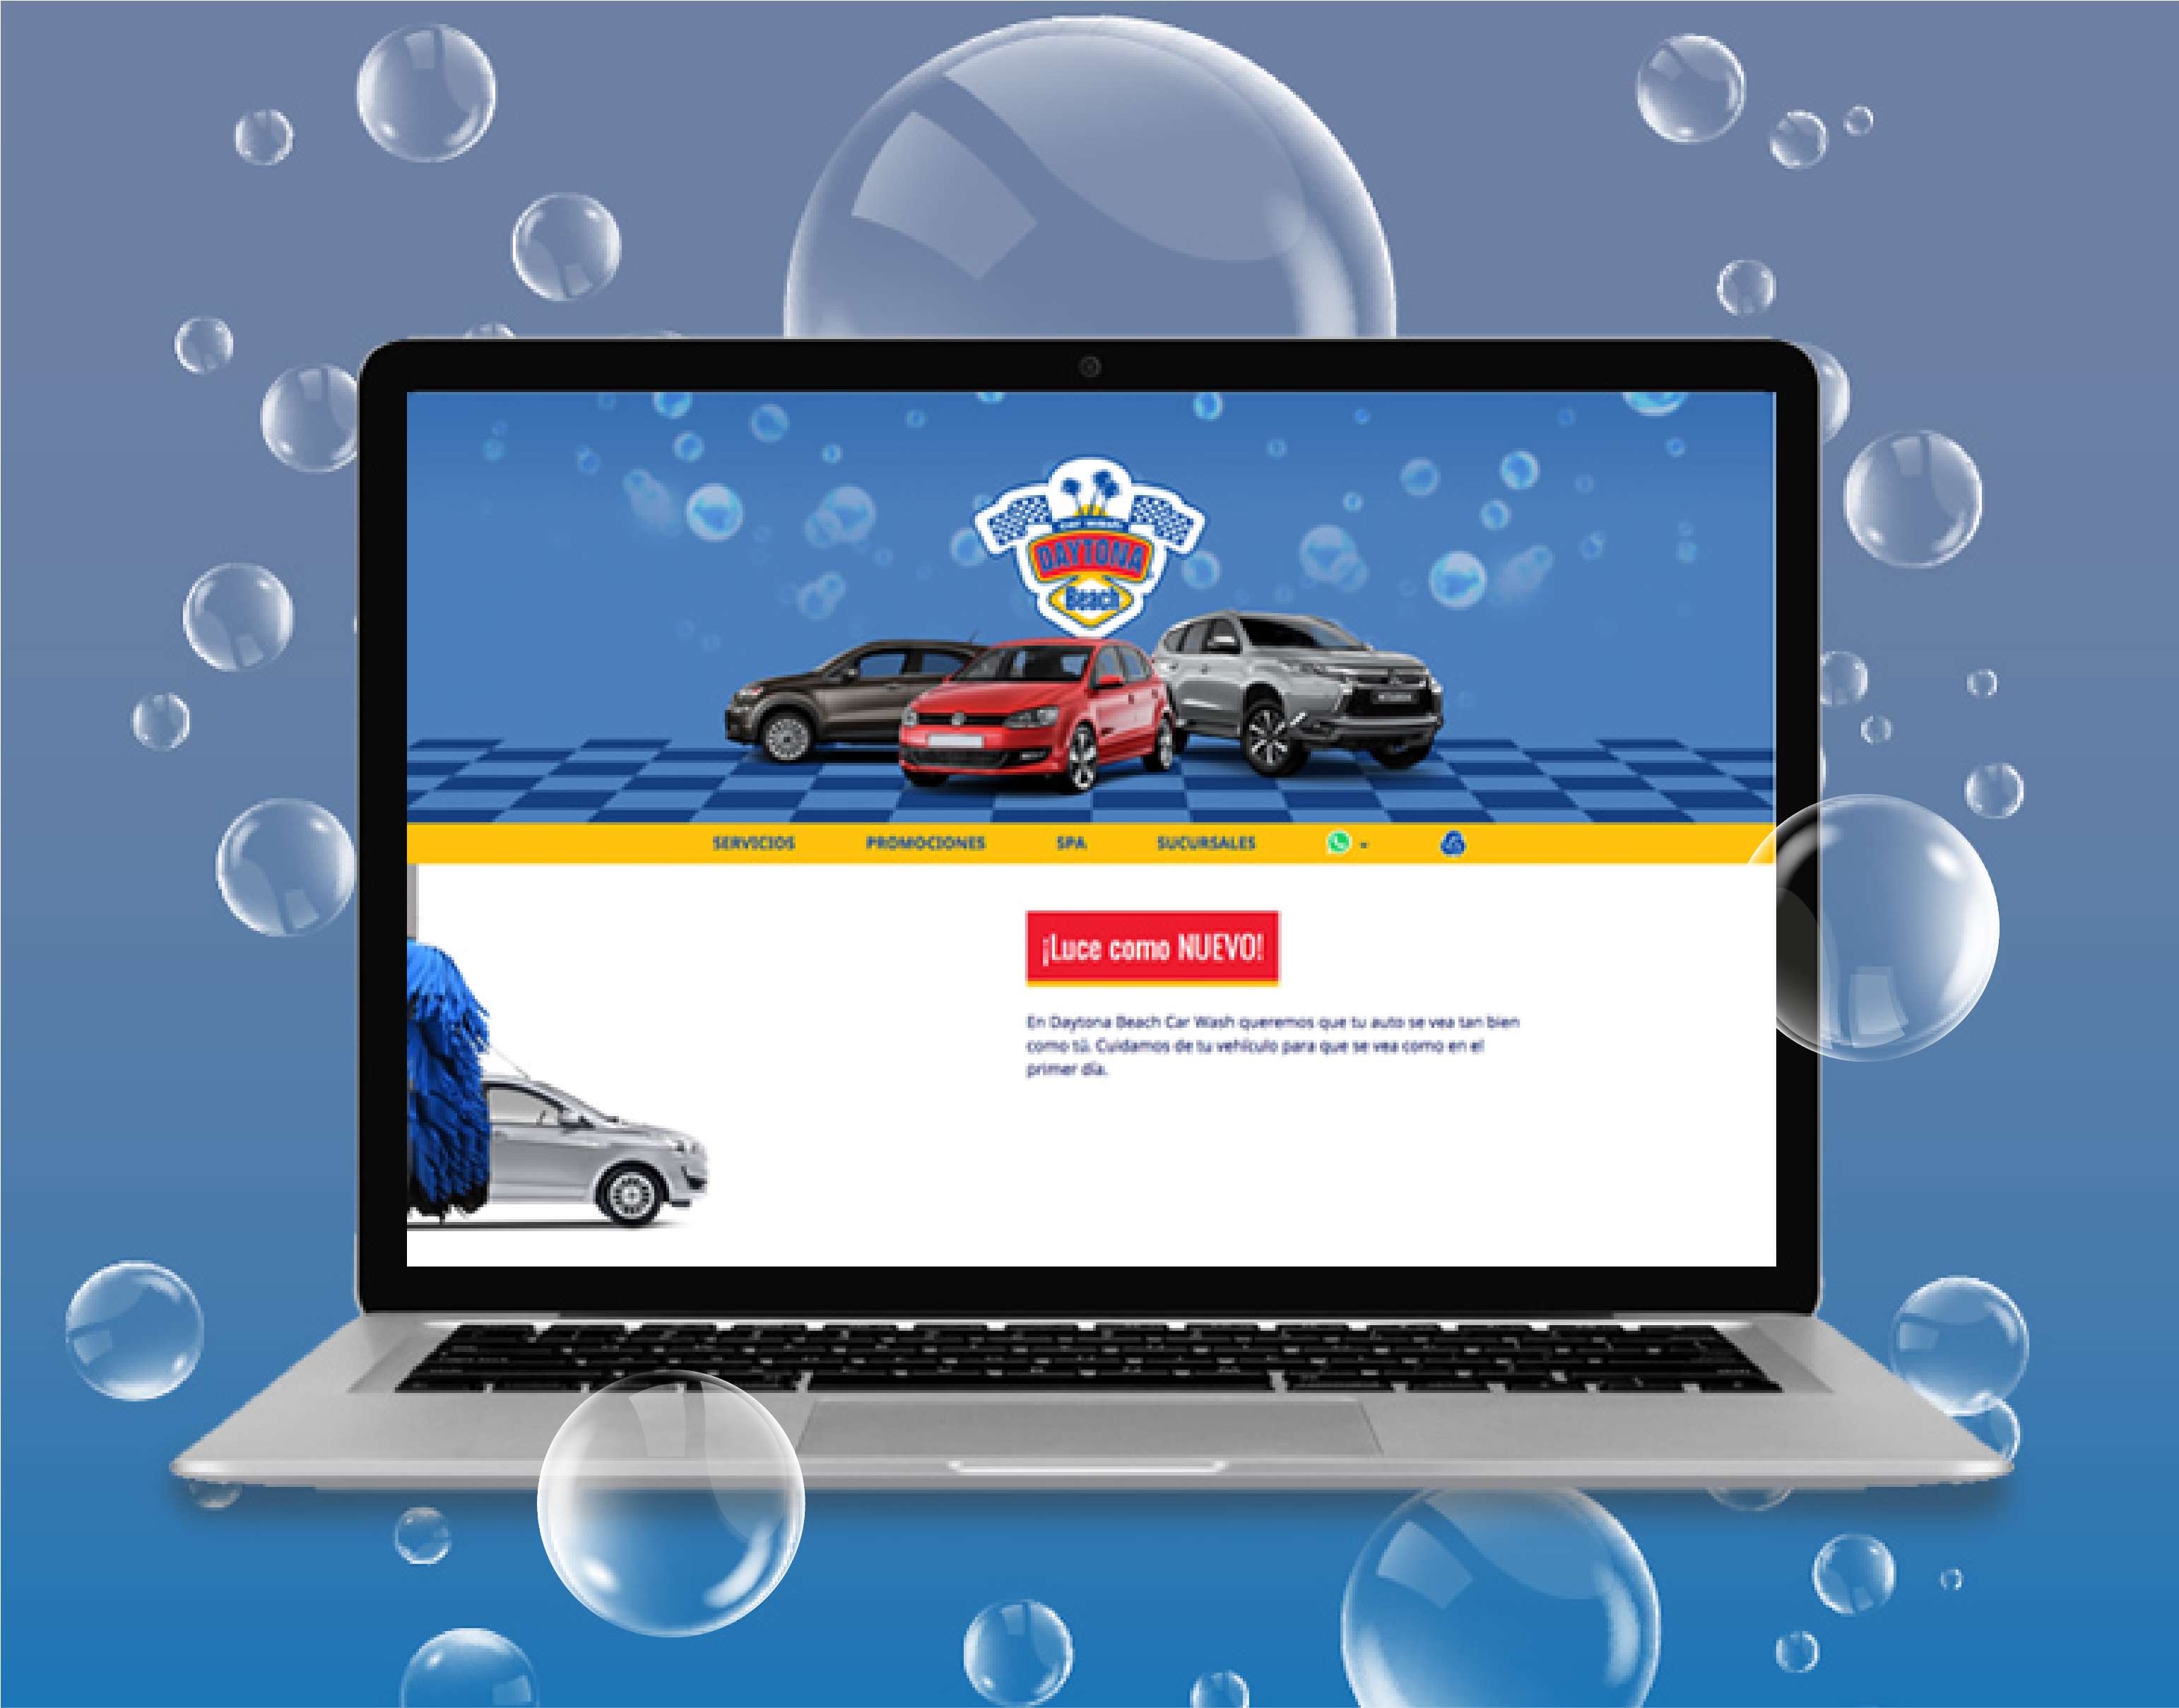 Daytona Beach Car Wash - Página web